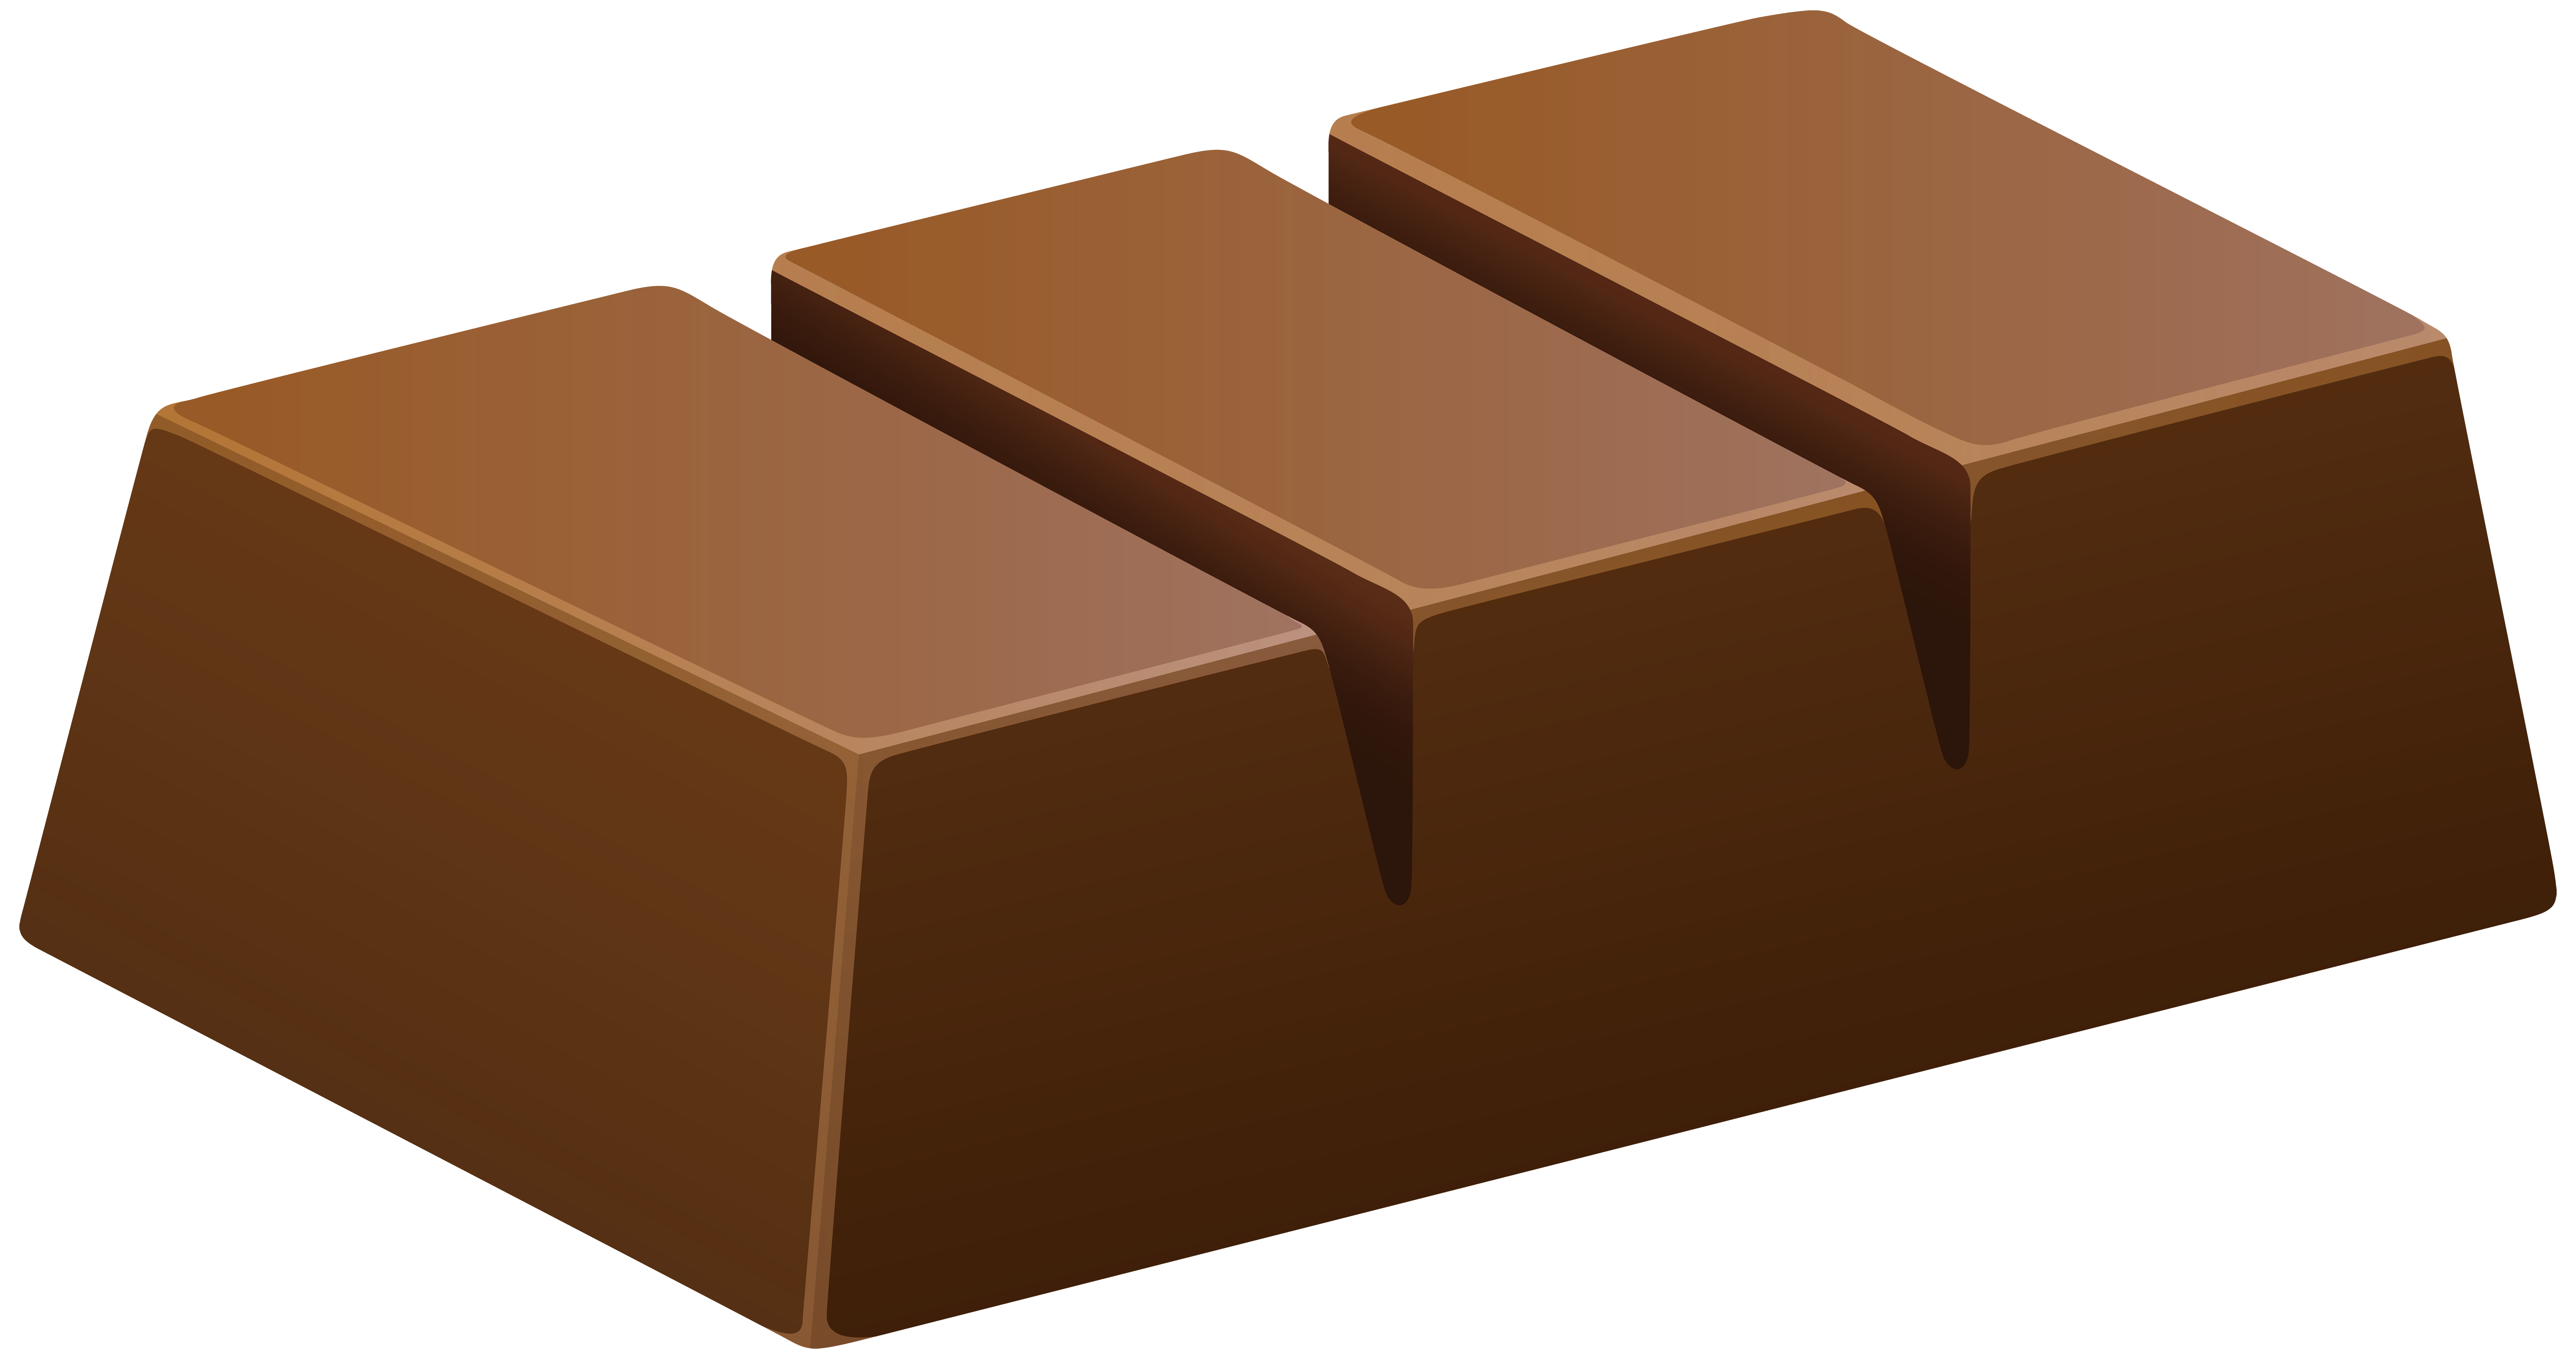 Chocolate Bar Clip Art - Tumundografico